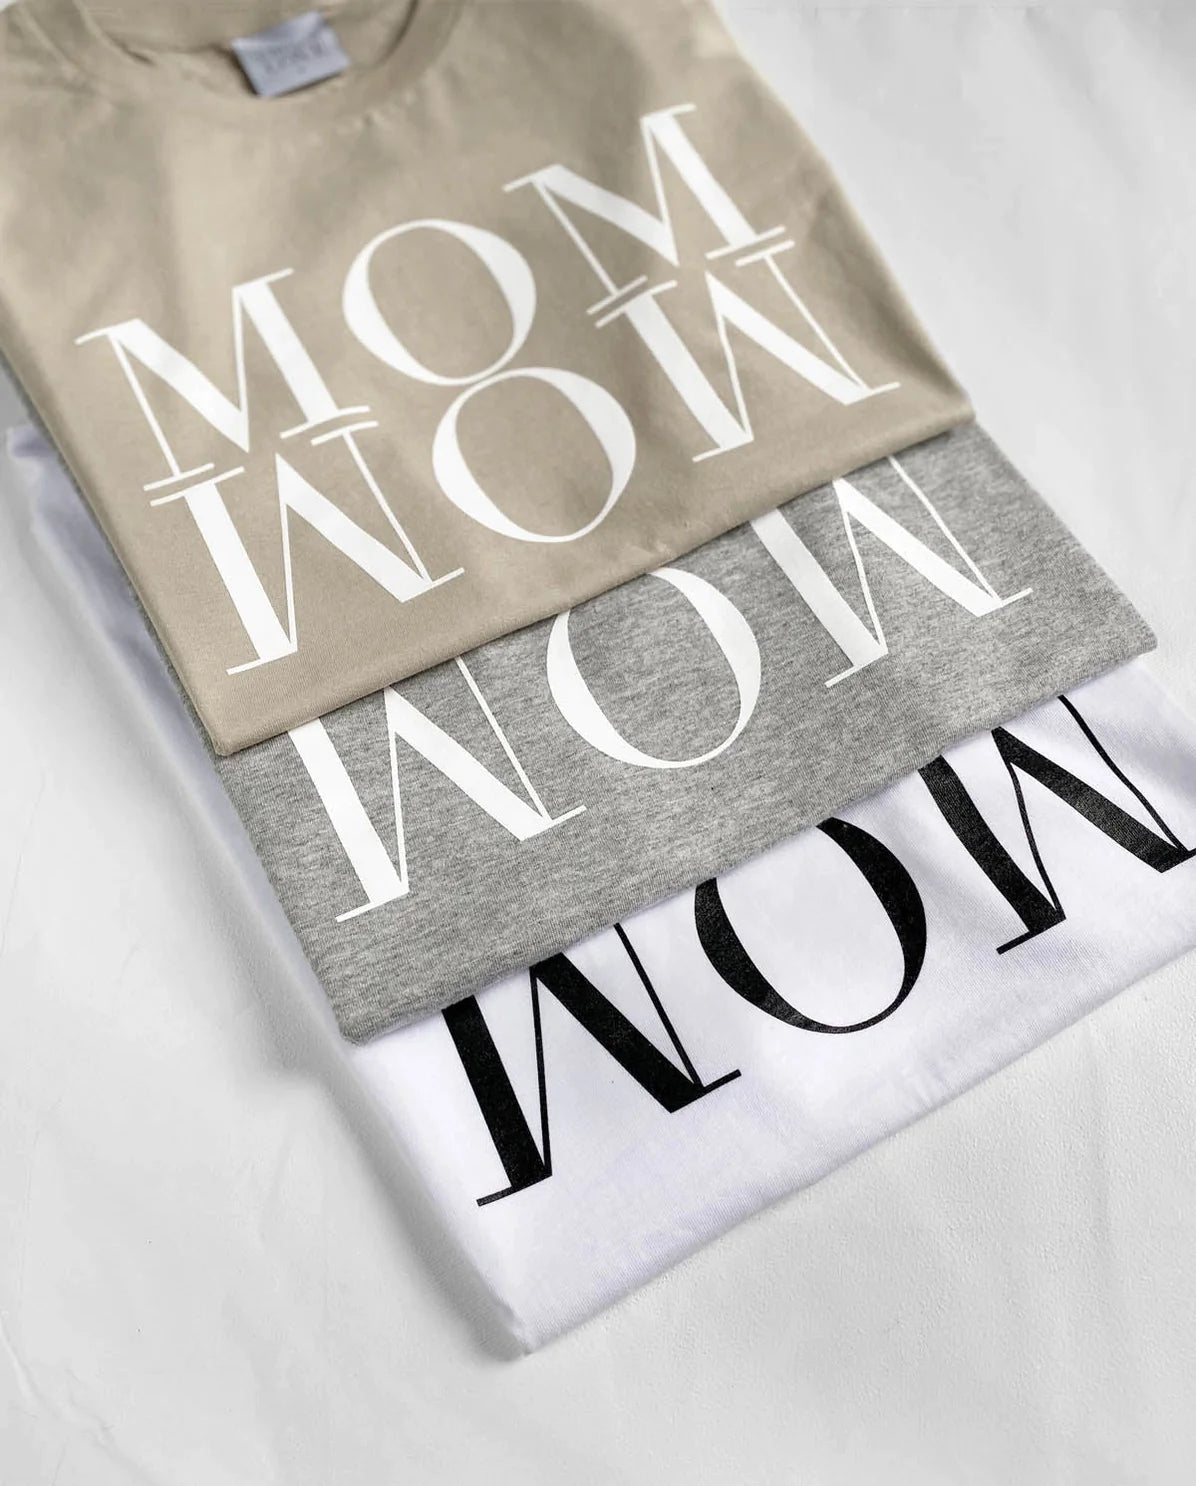 Mom Wow T-Shirt - Melange Grey